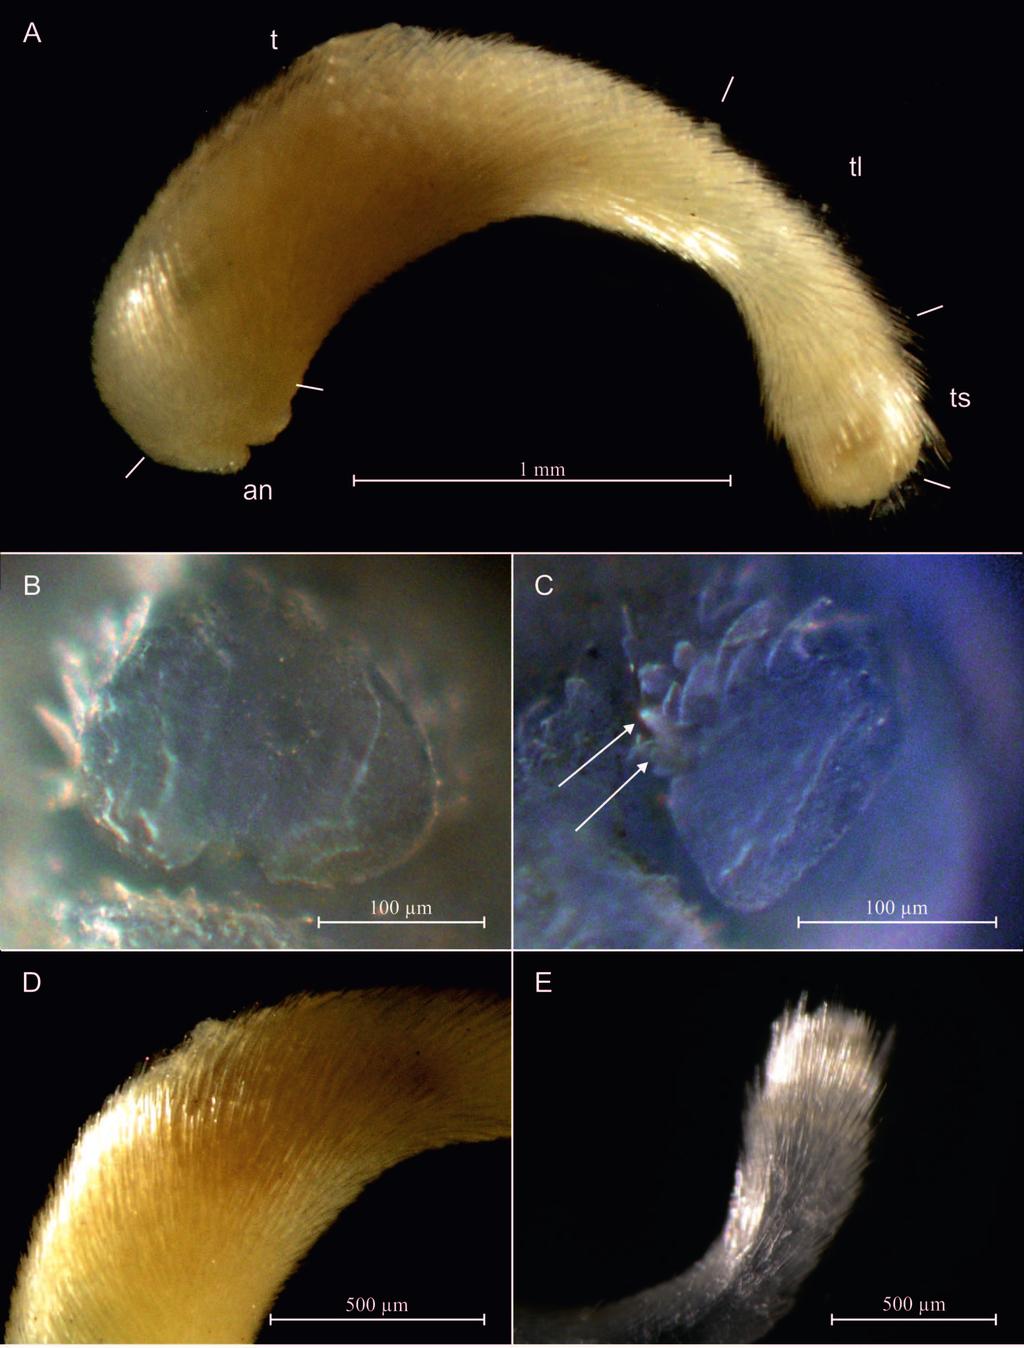 Señarís et al.: New records of Prochaetodermatidae on Galician bottoms 99 Figure 4. Prochaetoderma gauson (Scheltema, 1985) A. Habitus and body parts; B-C. Buccal shield under optical microscope, B.